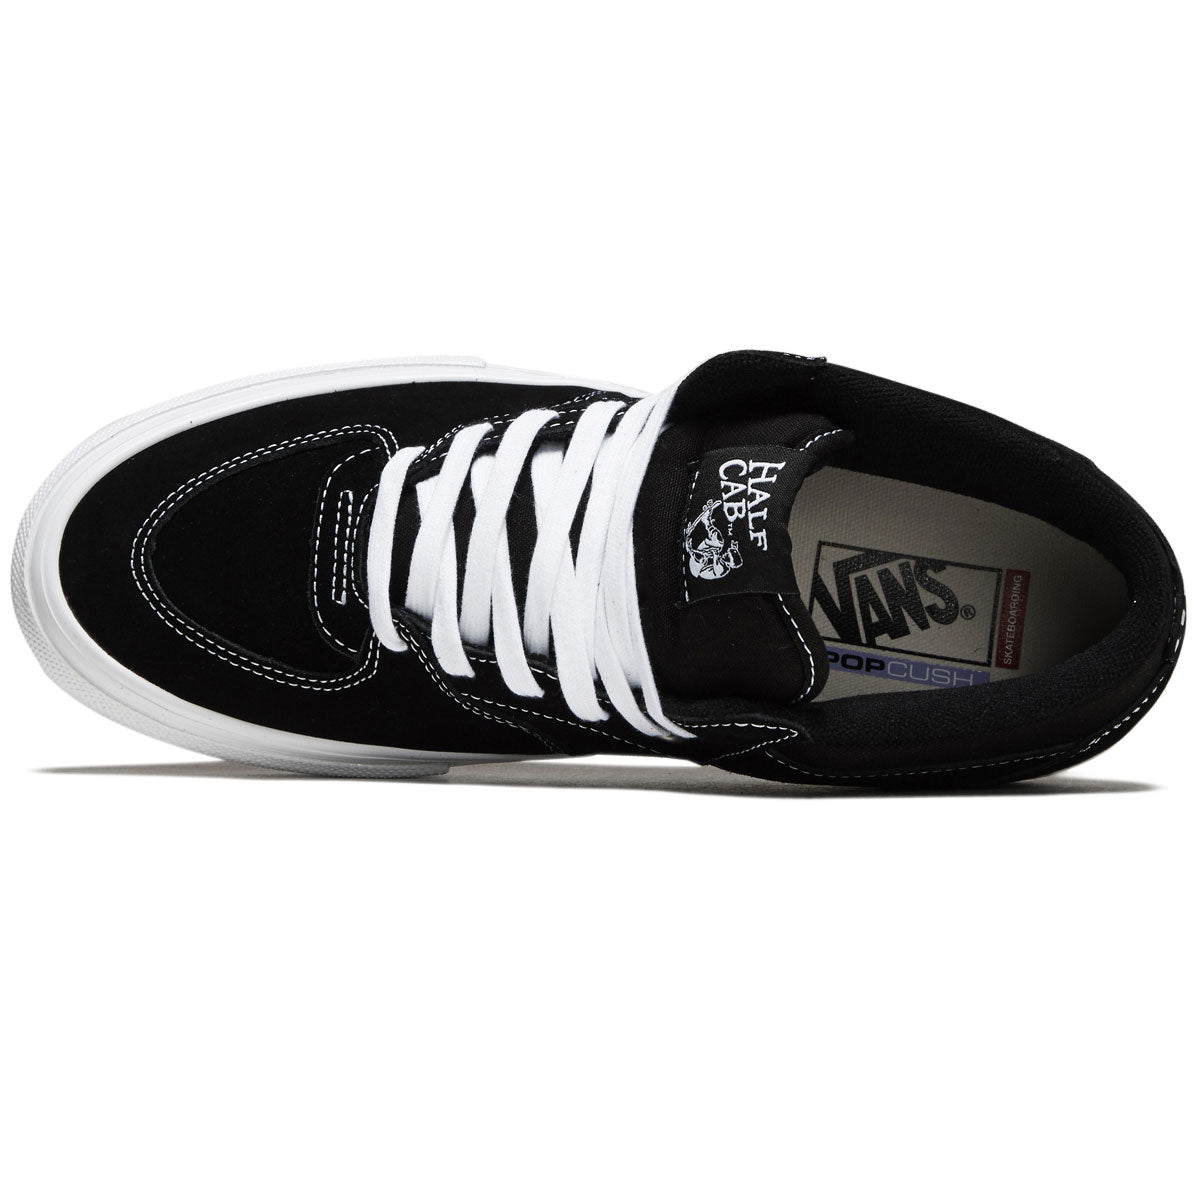 Vans Skate Half Cab Shoes - Black/White image 3